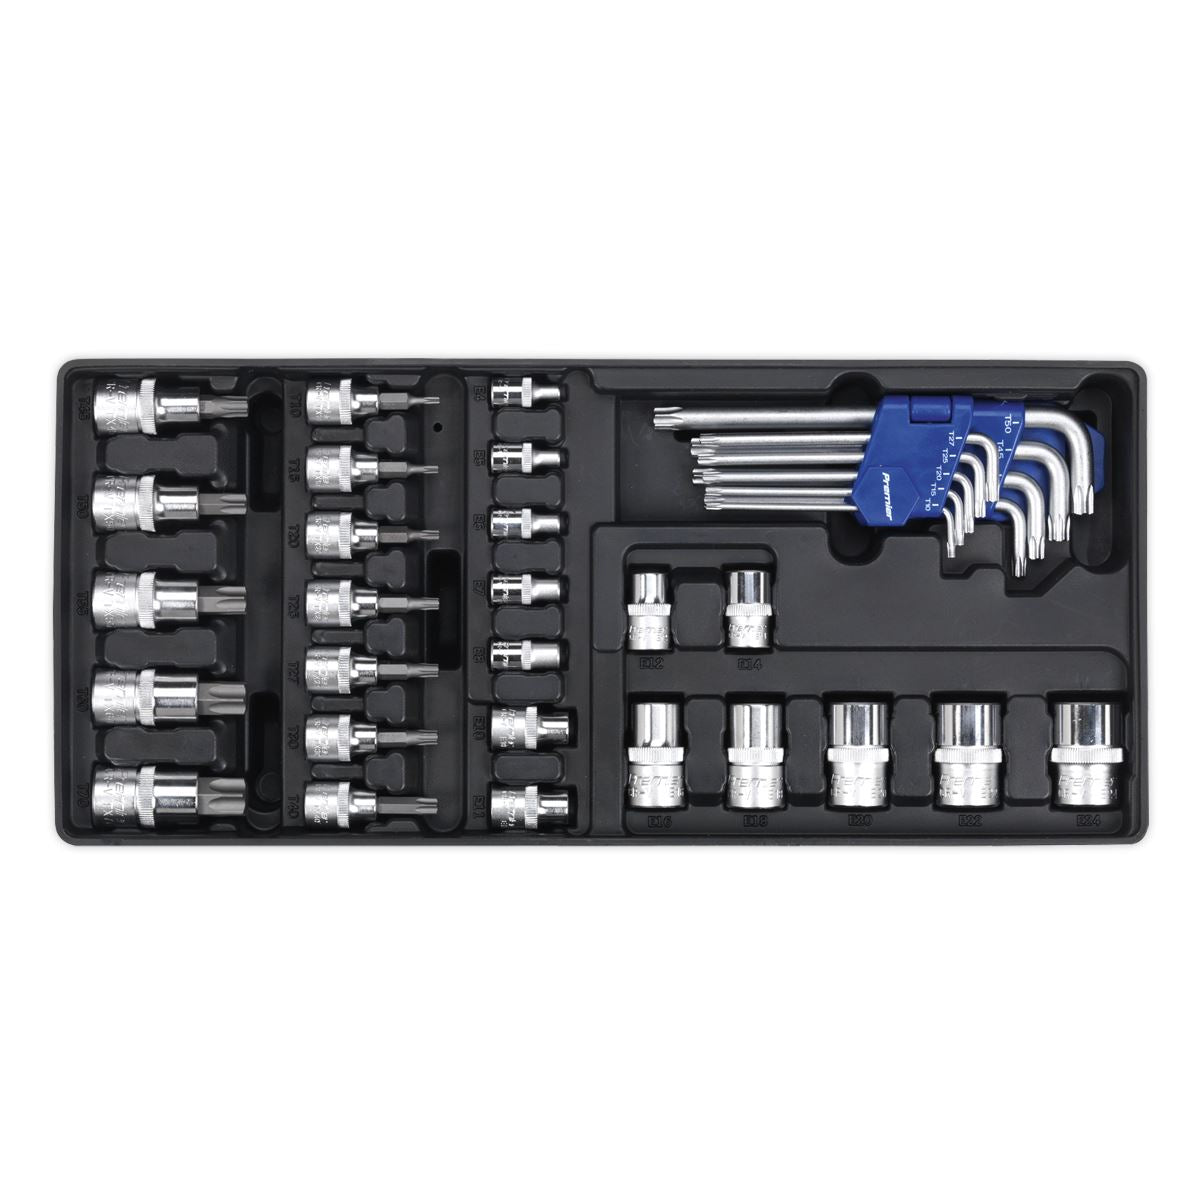 Sealey Premier Tool Tray with TRX-Star* Key, Socket Bit & Socket Set 35pc